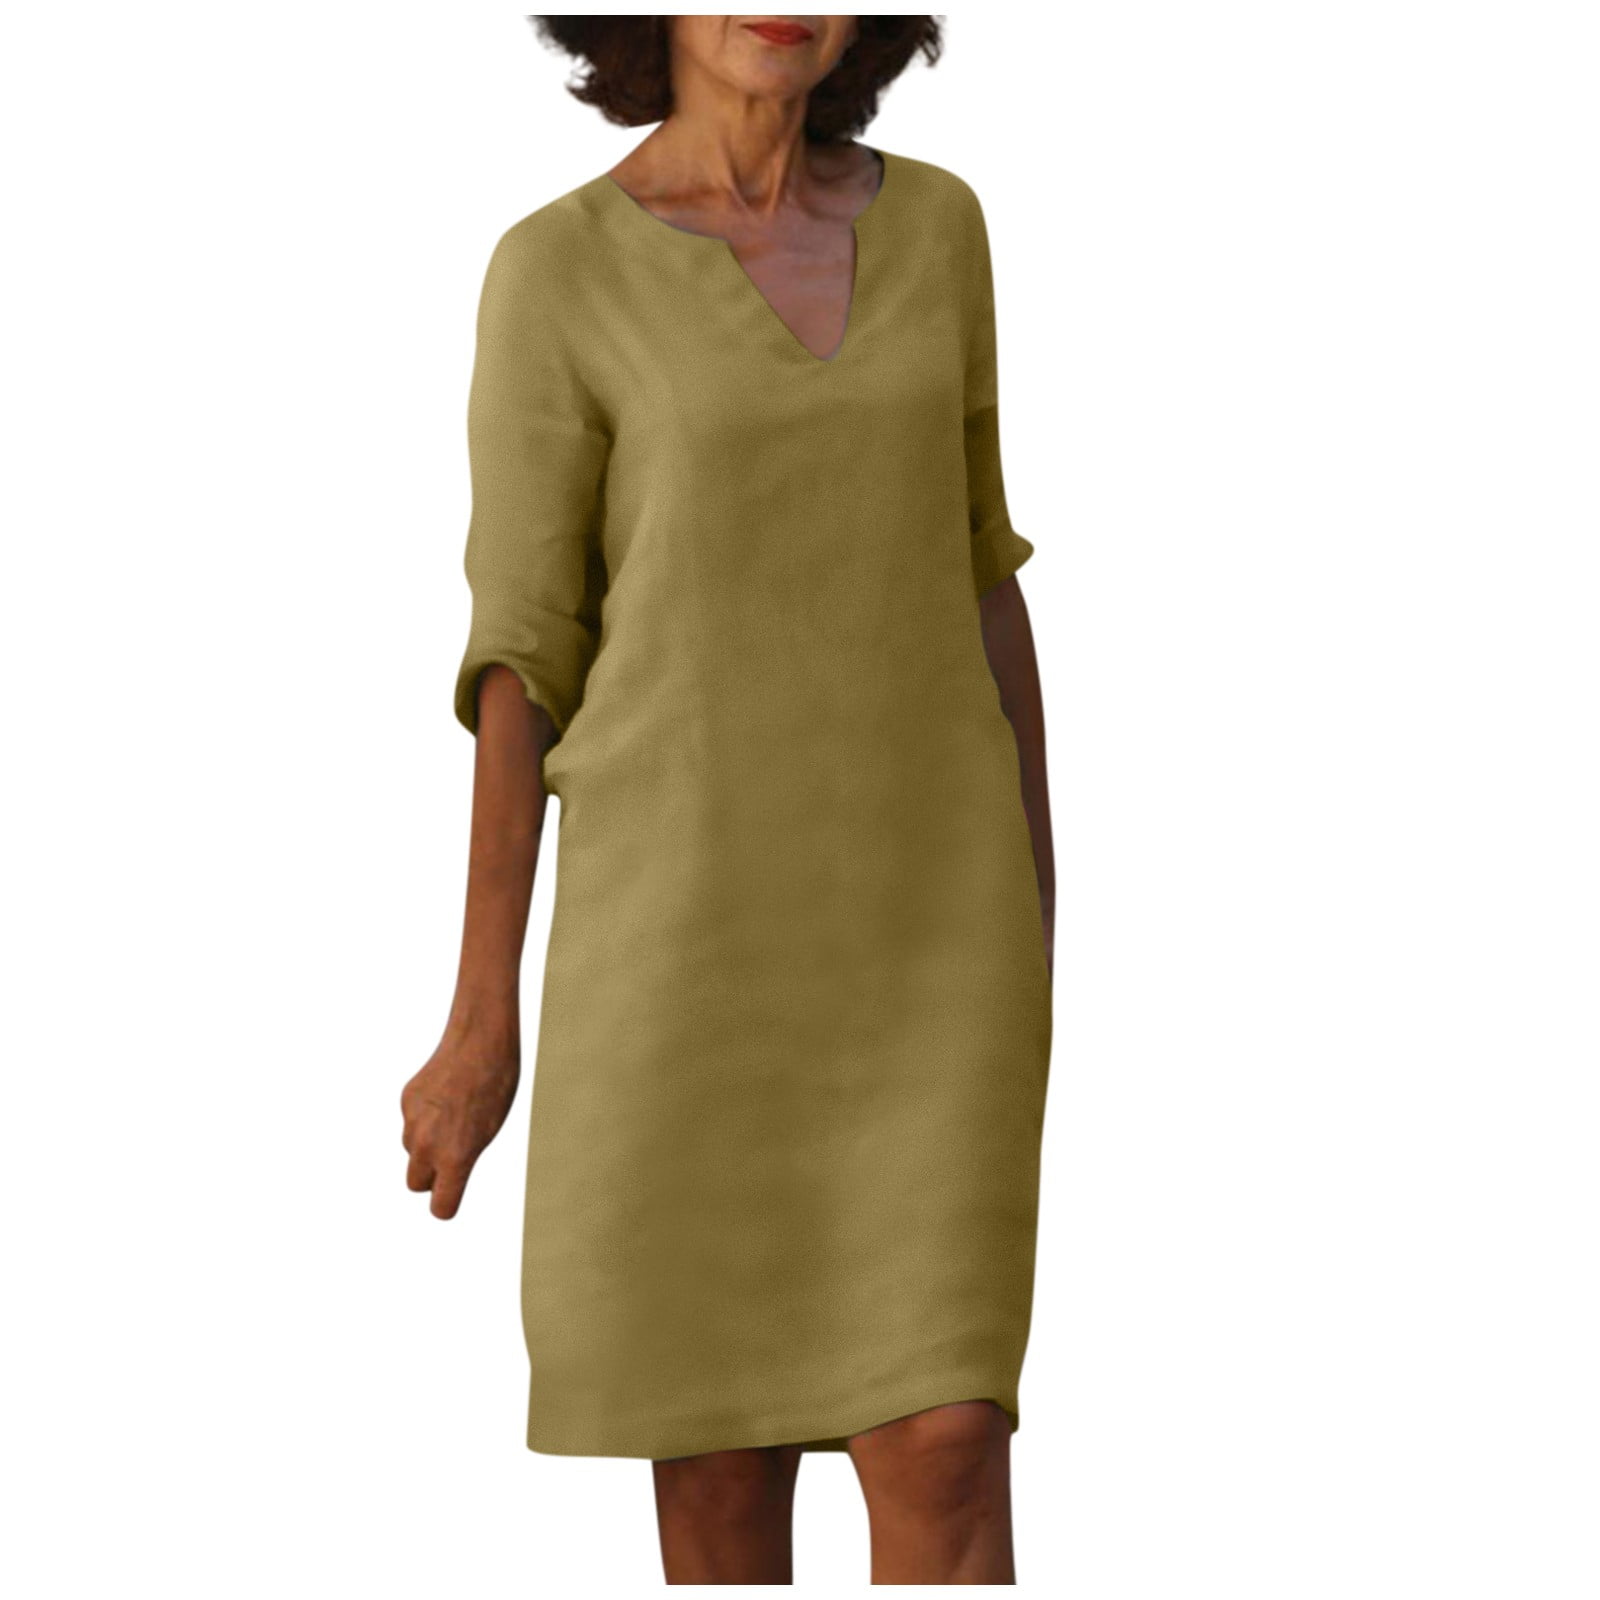 Mlqidk Cotton Linen Dresses for Women Vintage 3 4 Sleeve V Neck Solid Color  Casual Loose Knee Length Shift Dress,Mint Green XXXL 